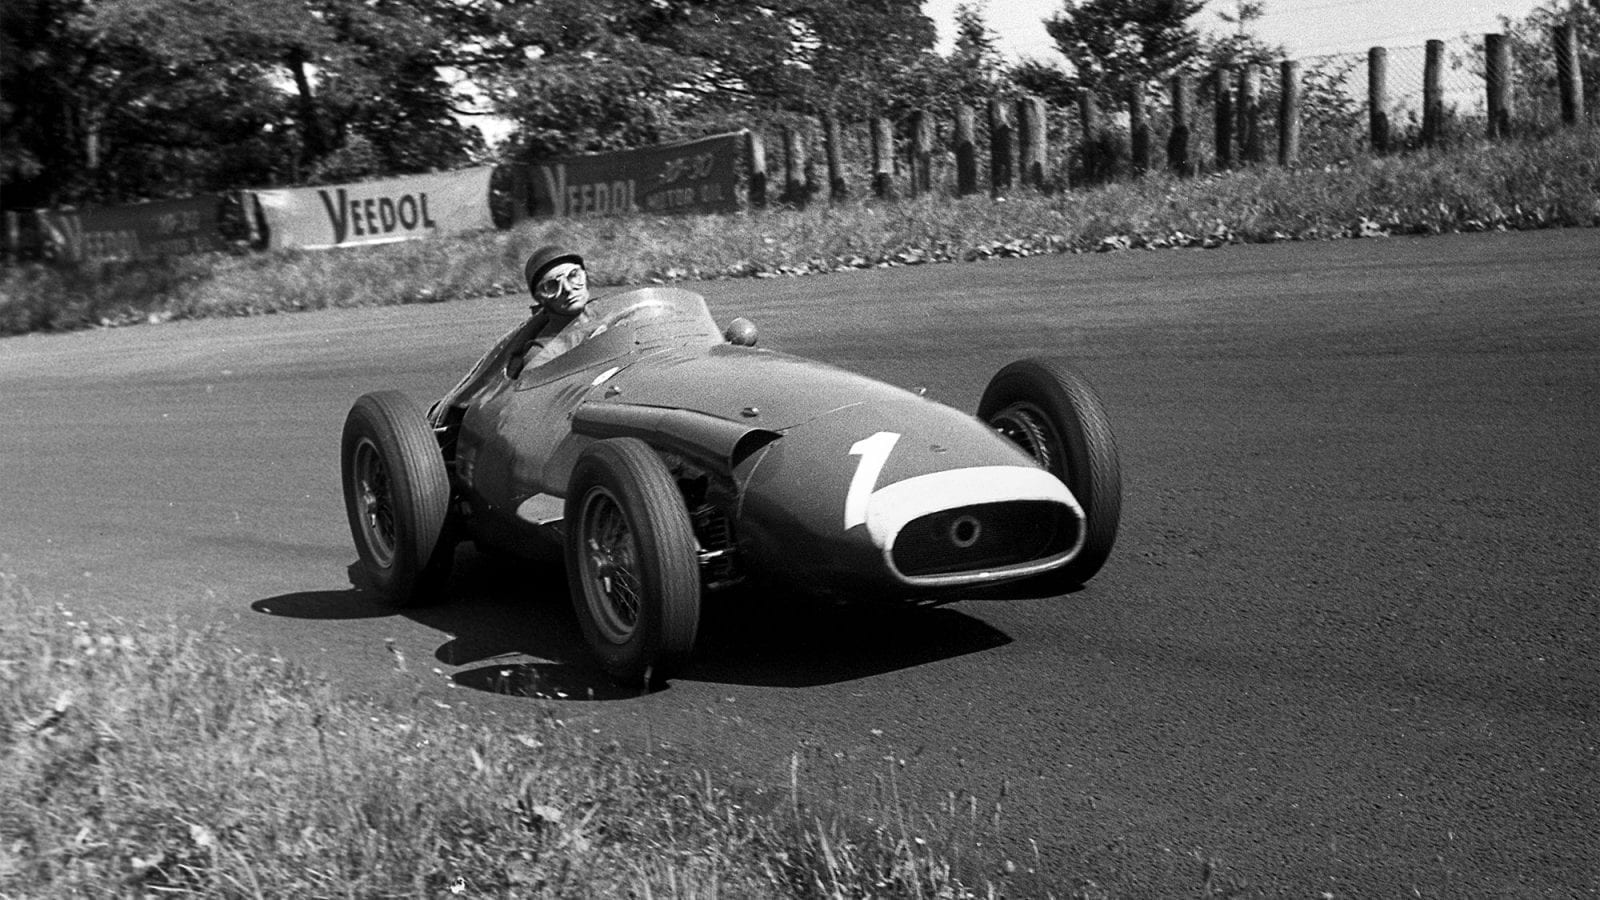 1957 German Grand Prix Fangio